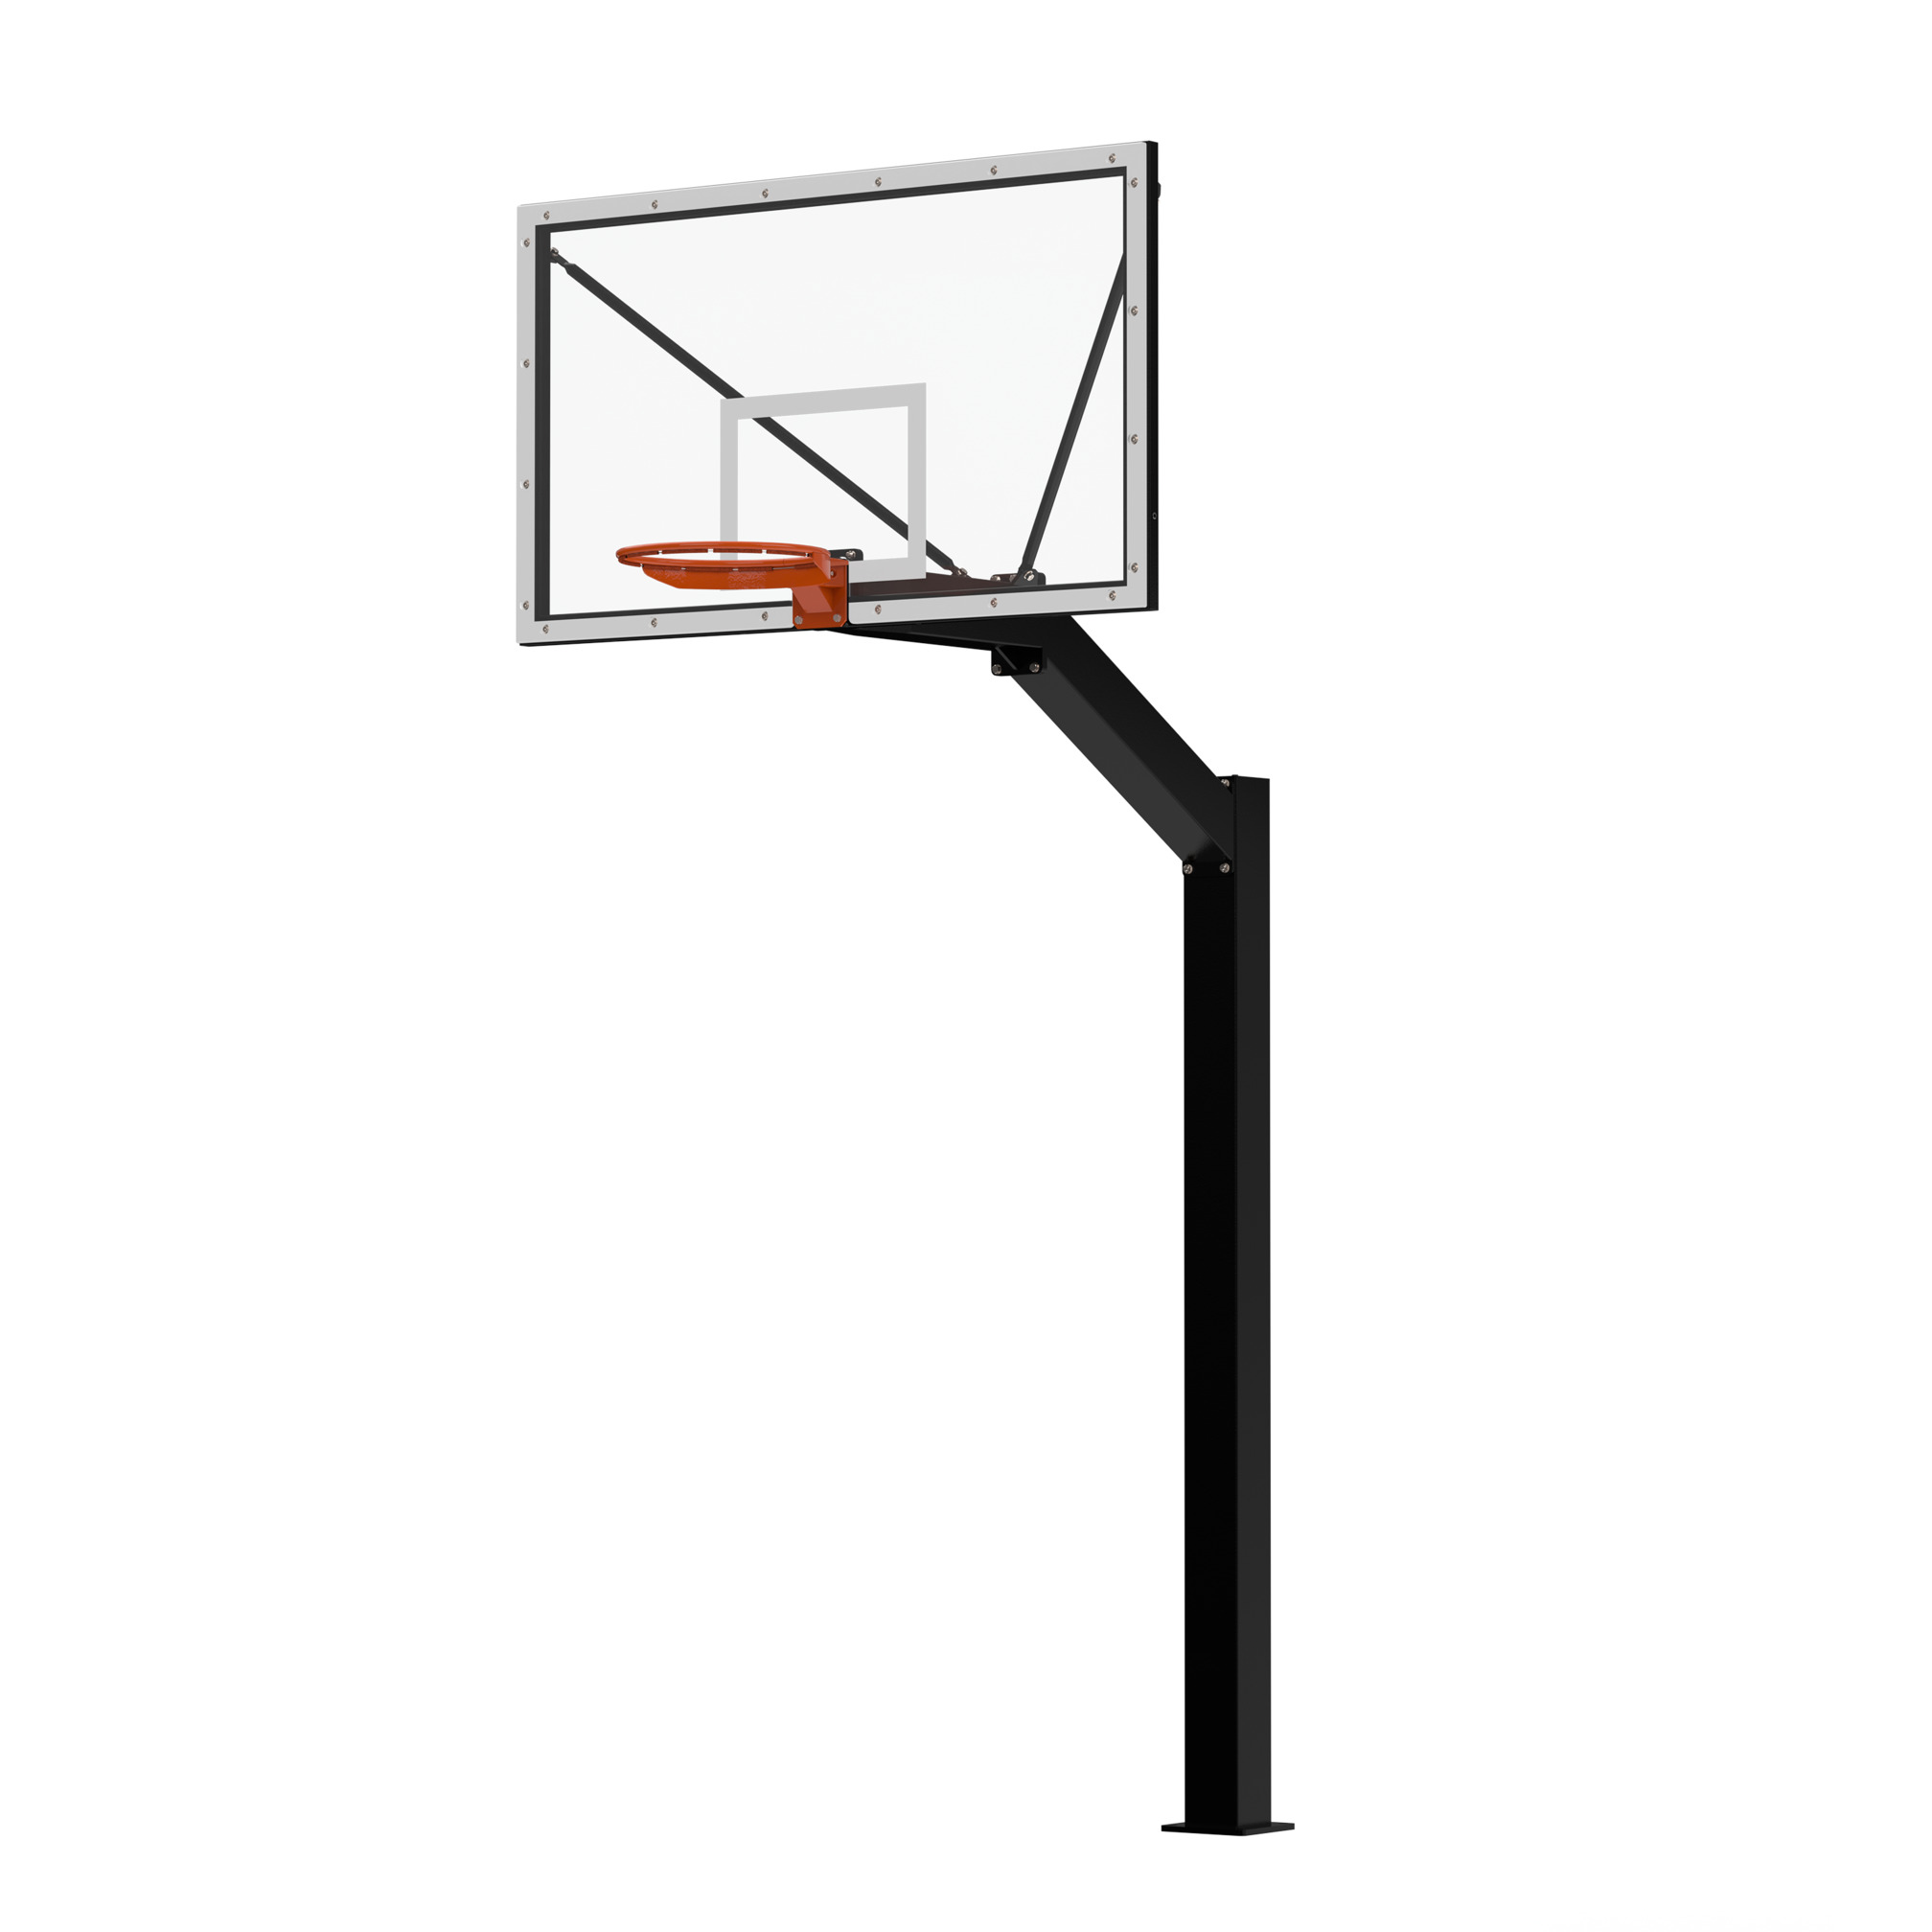 Basketball-Anlage Urban Court Slammer, 165 cm Ausladung, inkl. Basketballkorb Wettkampf